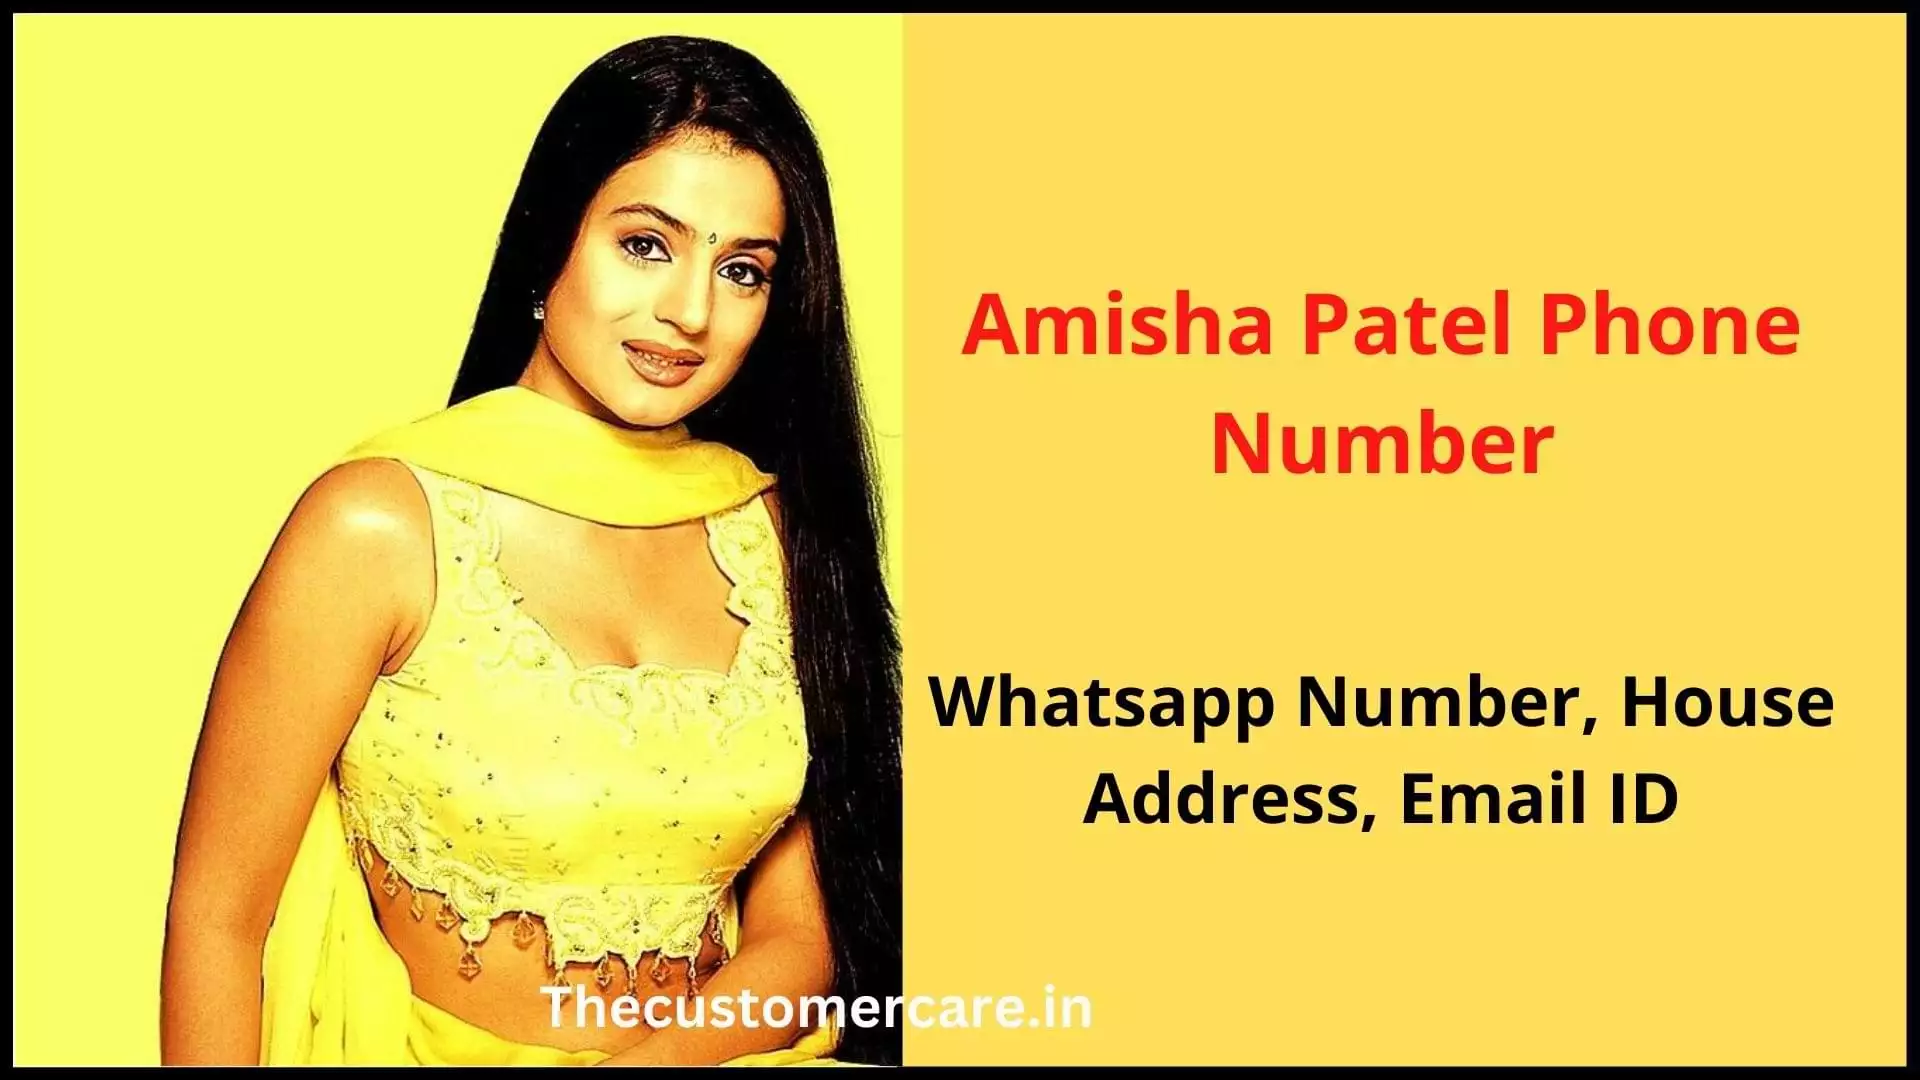 Amisha Patel Phone Number